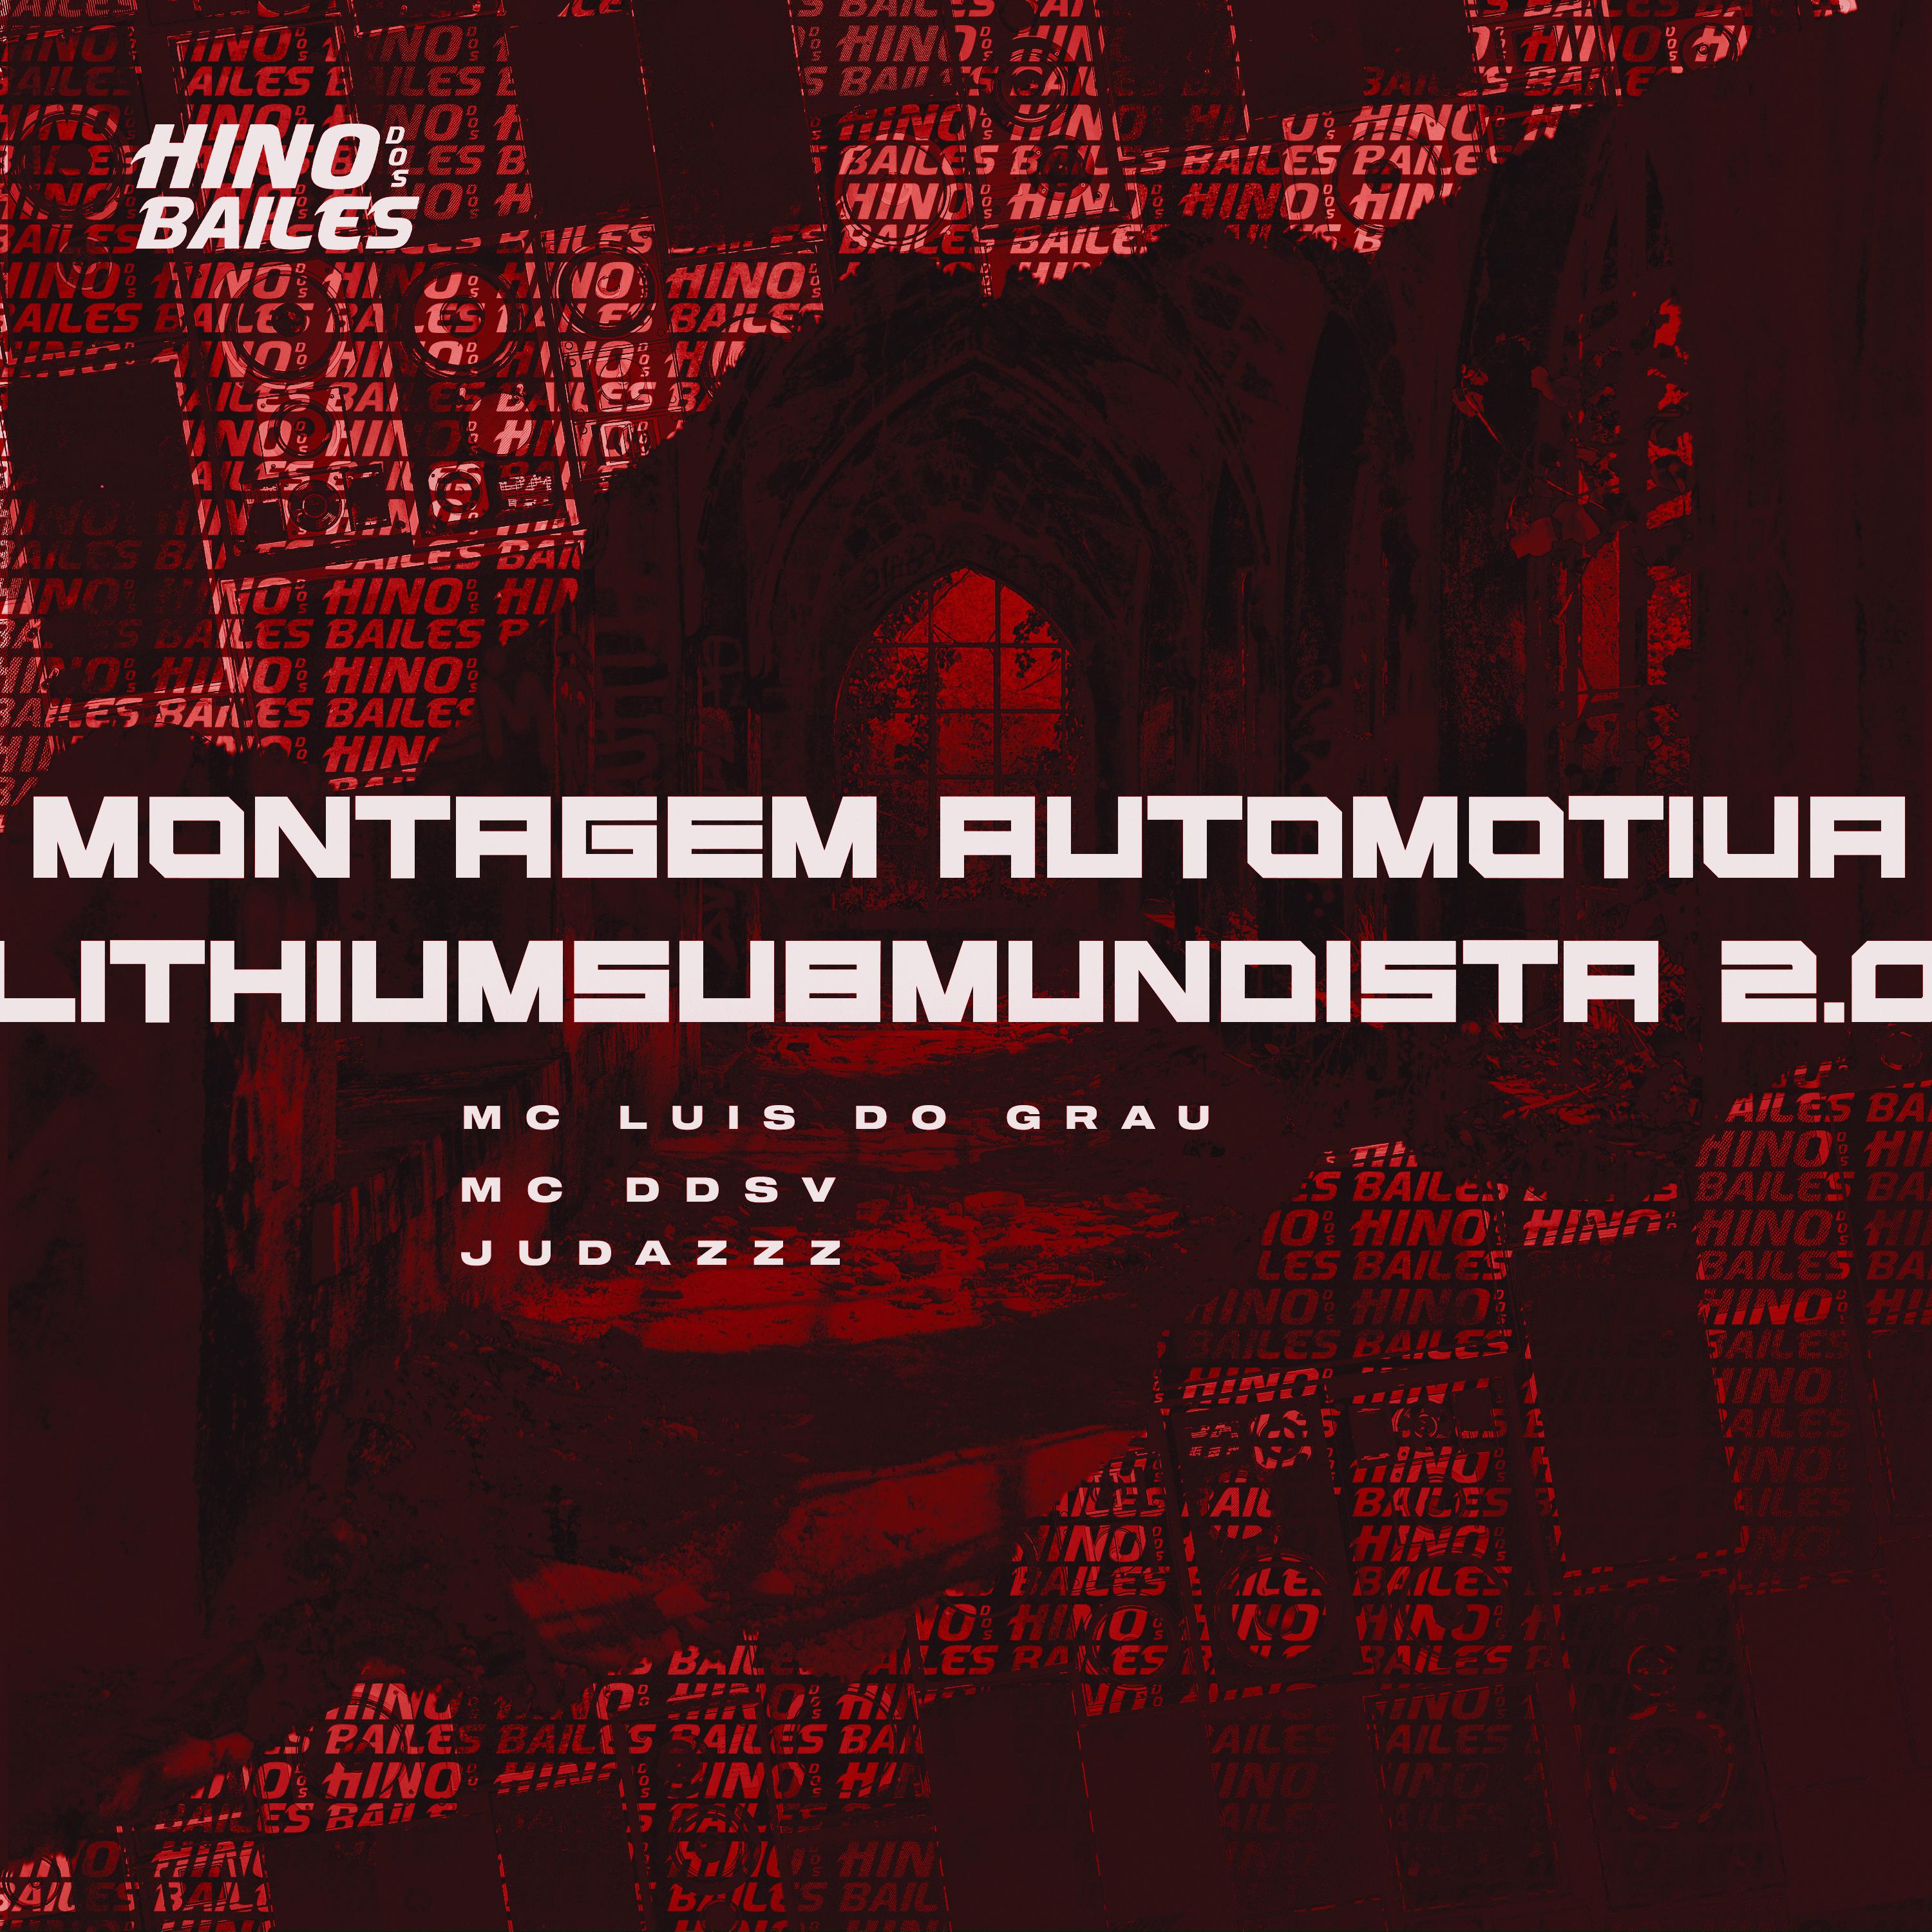 Постер альбома Montagem Automotiva Lithiumsubmundista 2.0